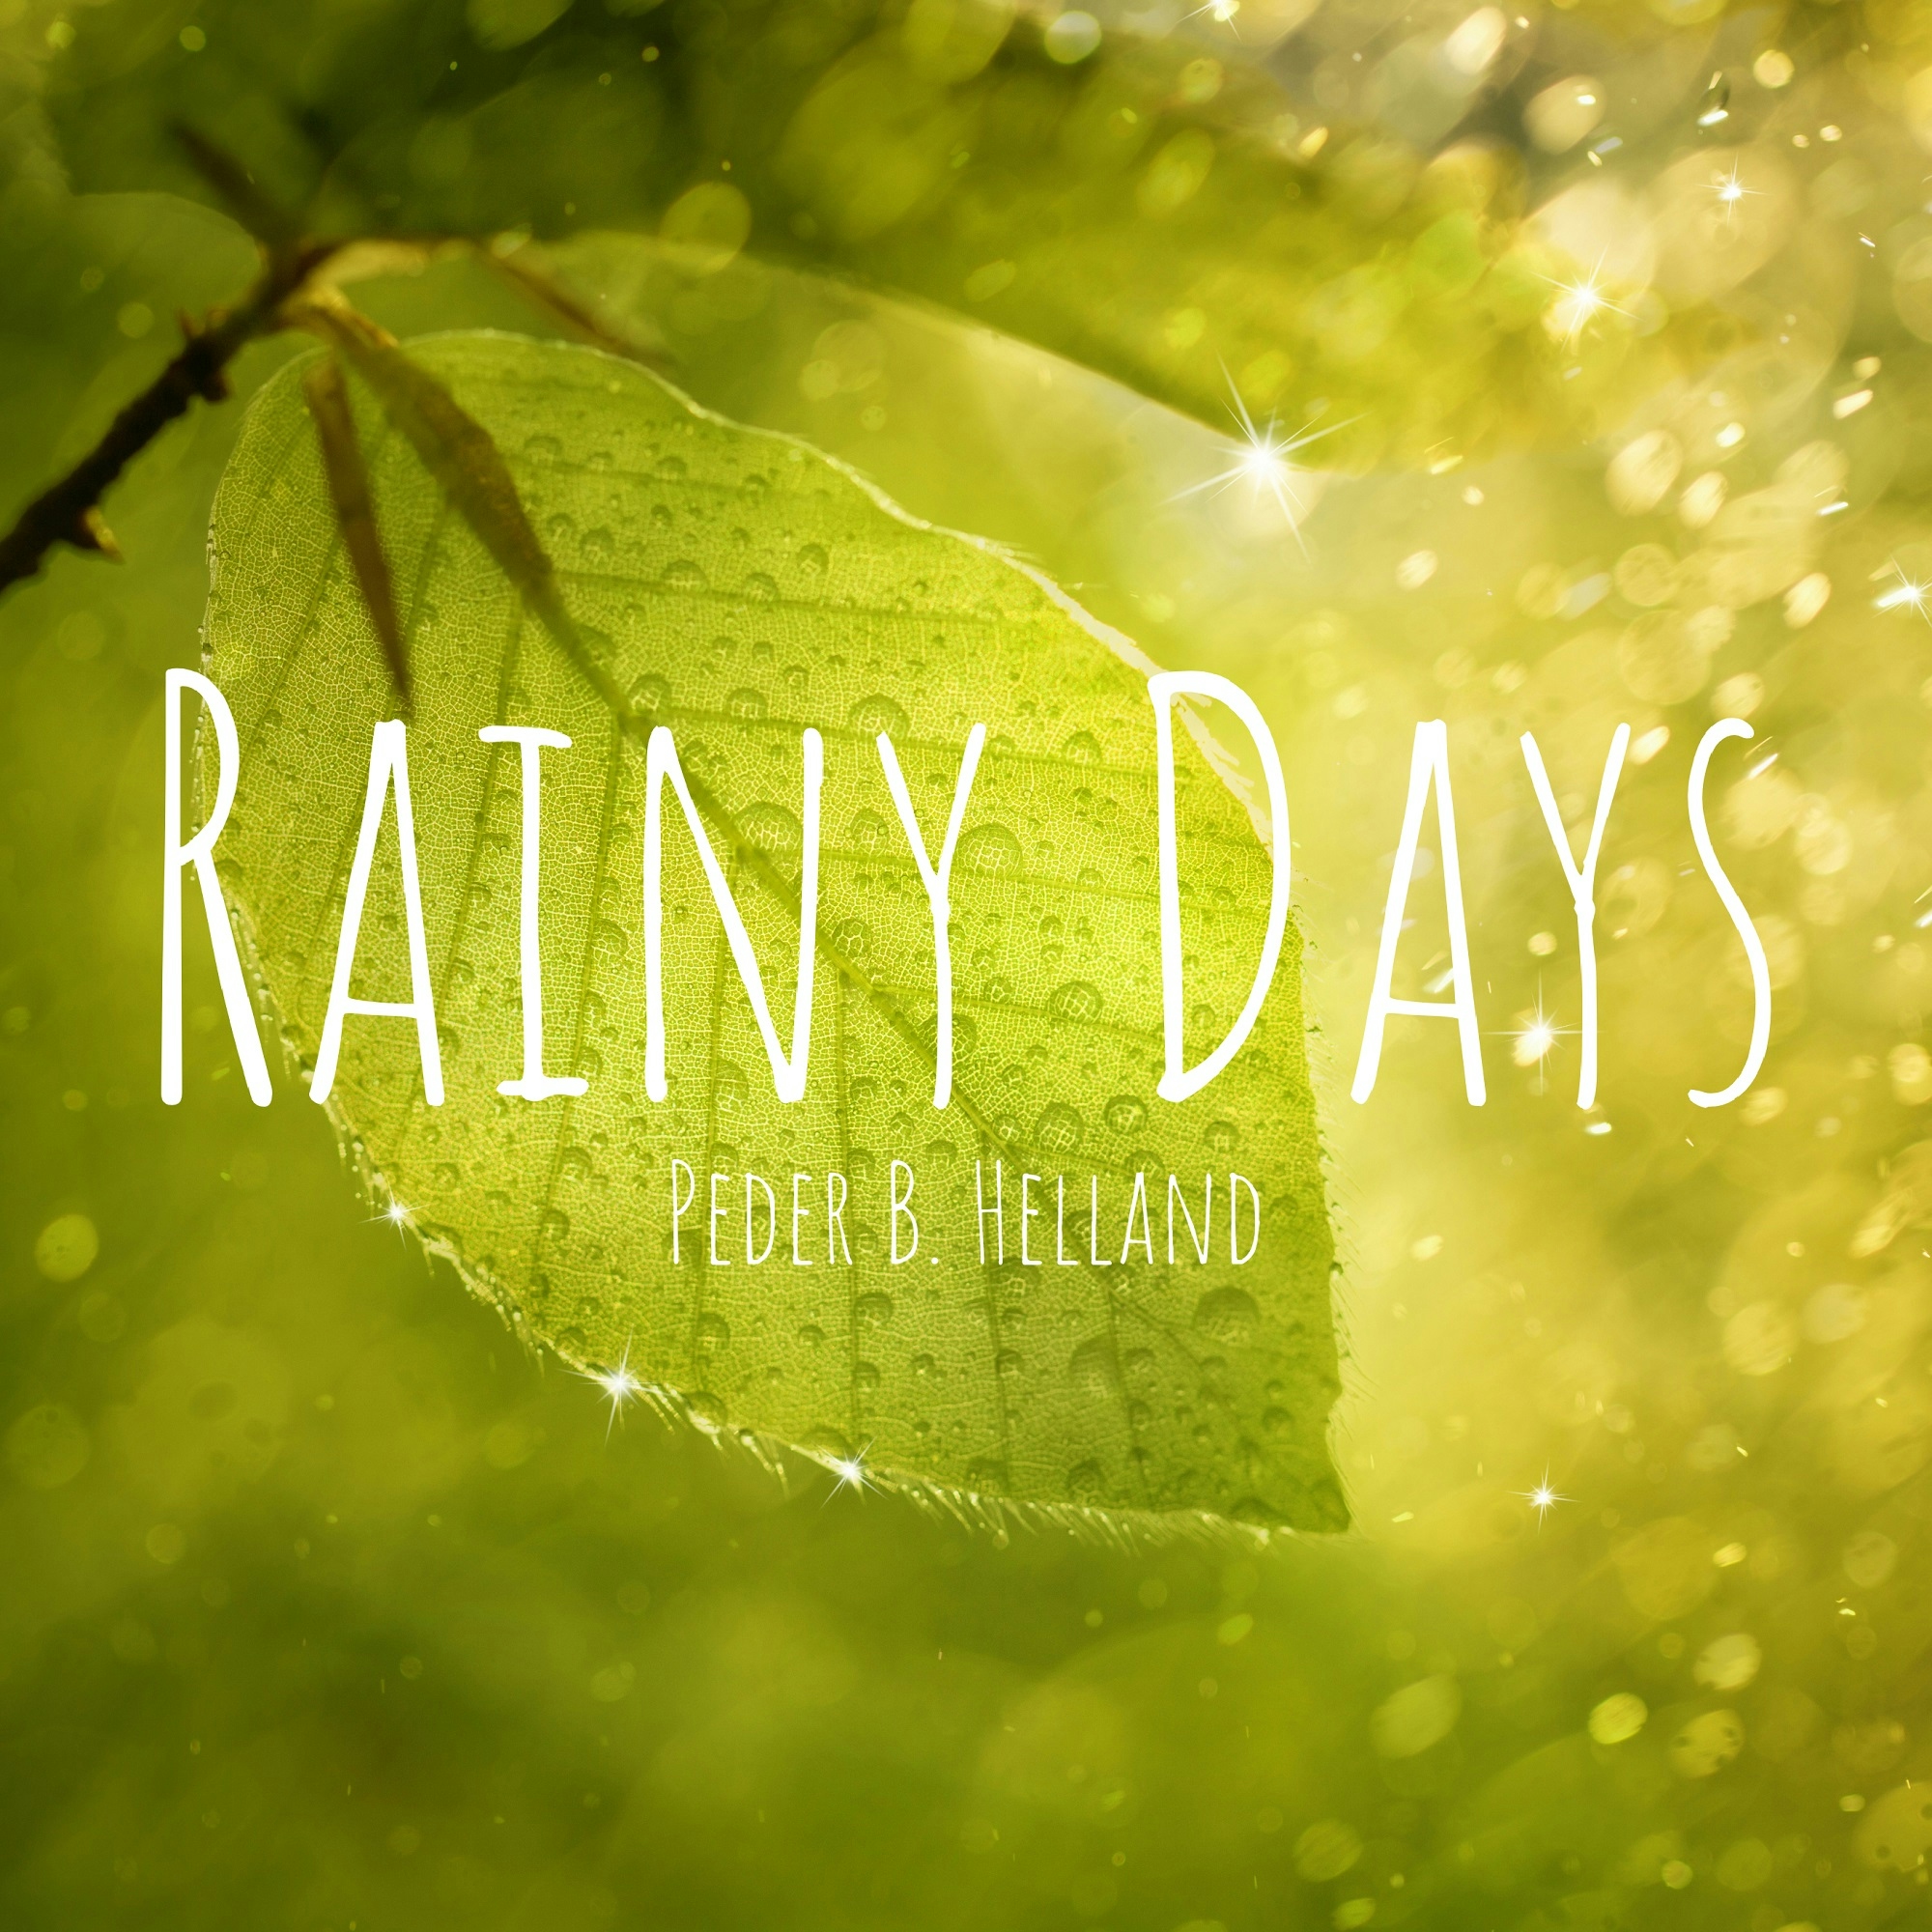 Cover art for the album Rainy Days by Peder B. Helland